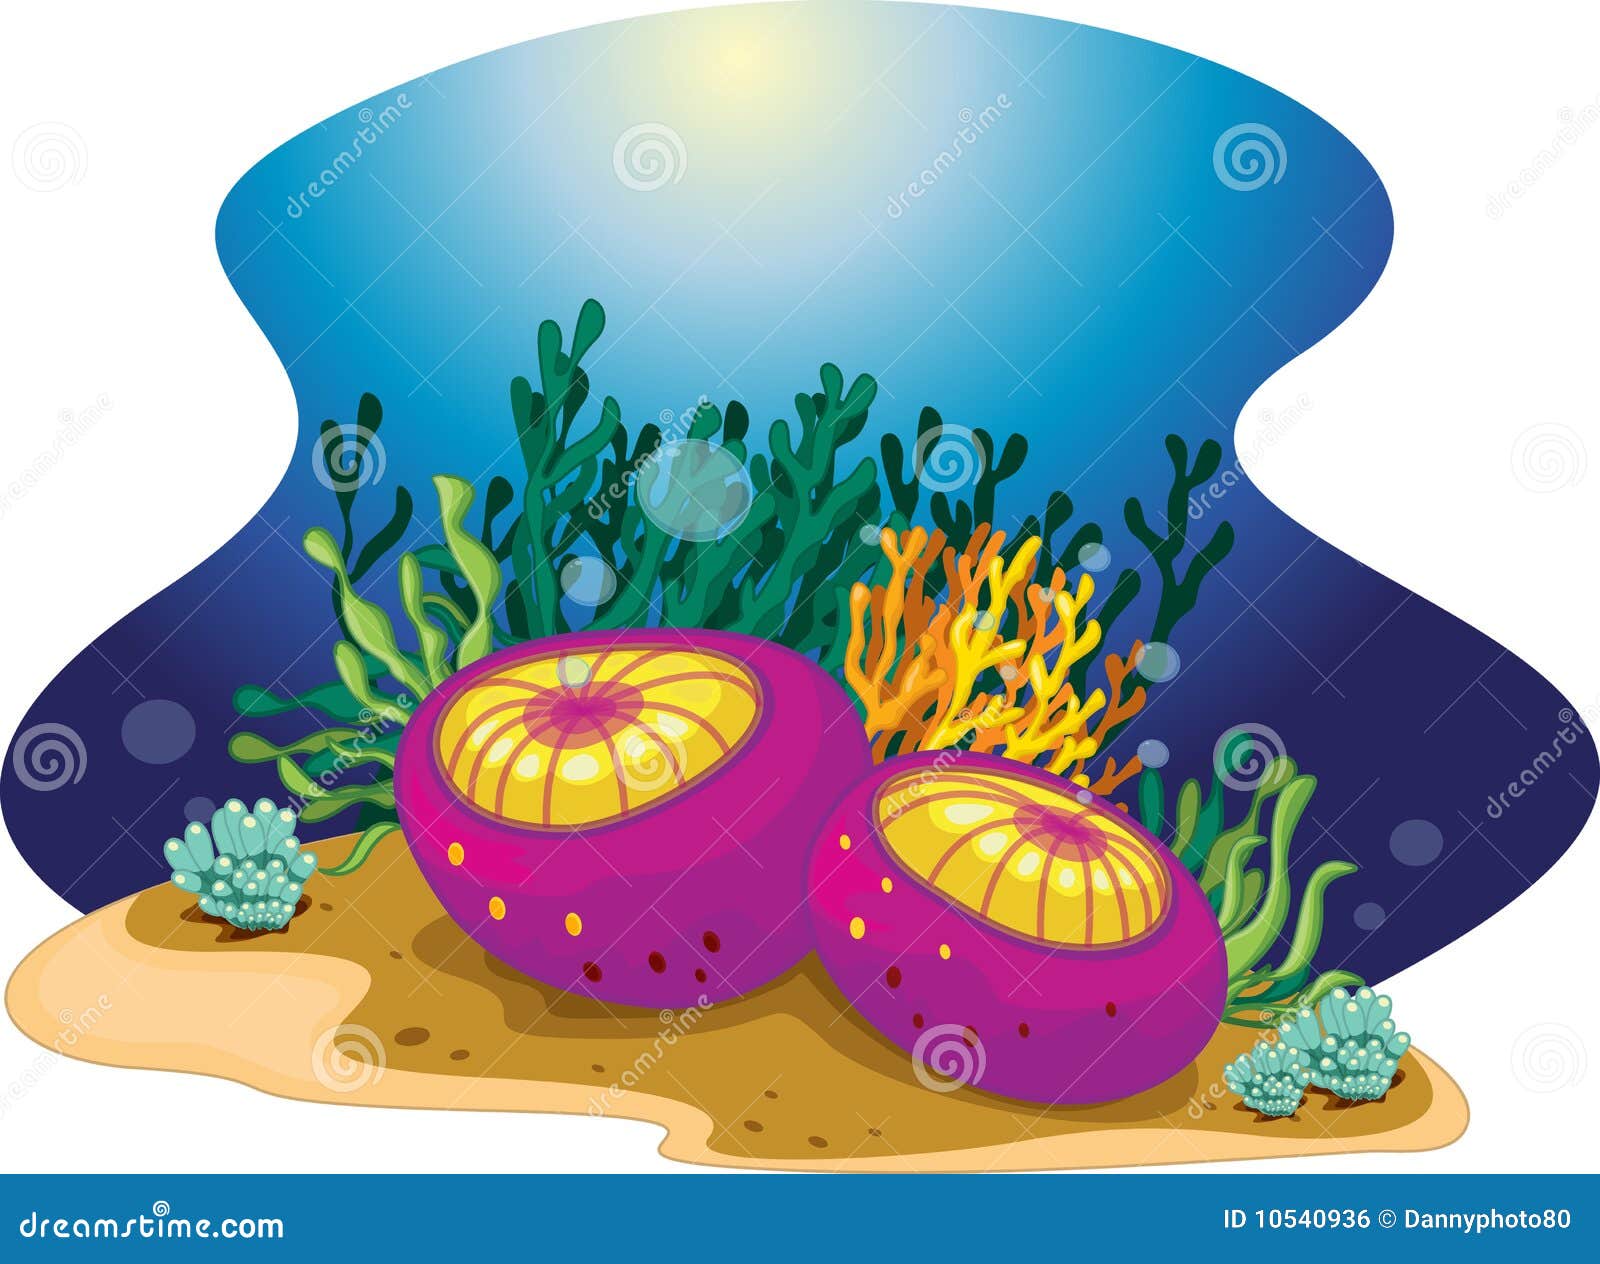 ocean plants clipart - photo #22